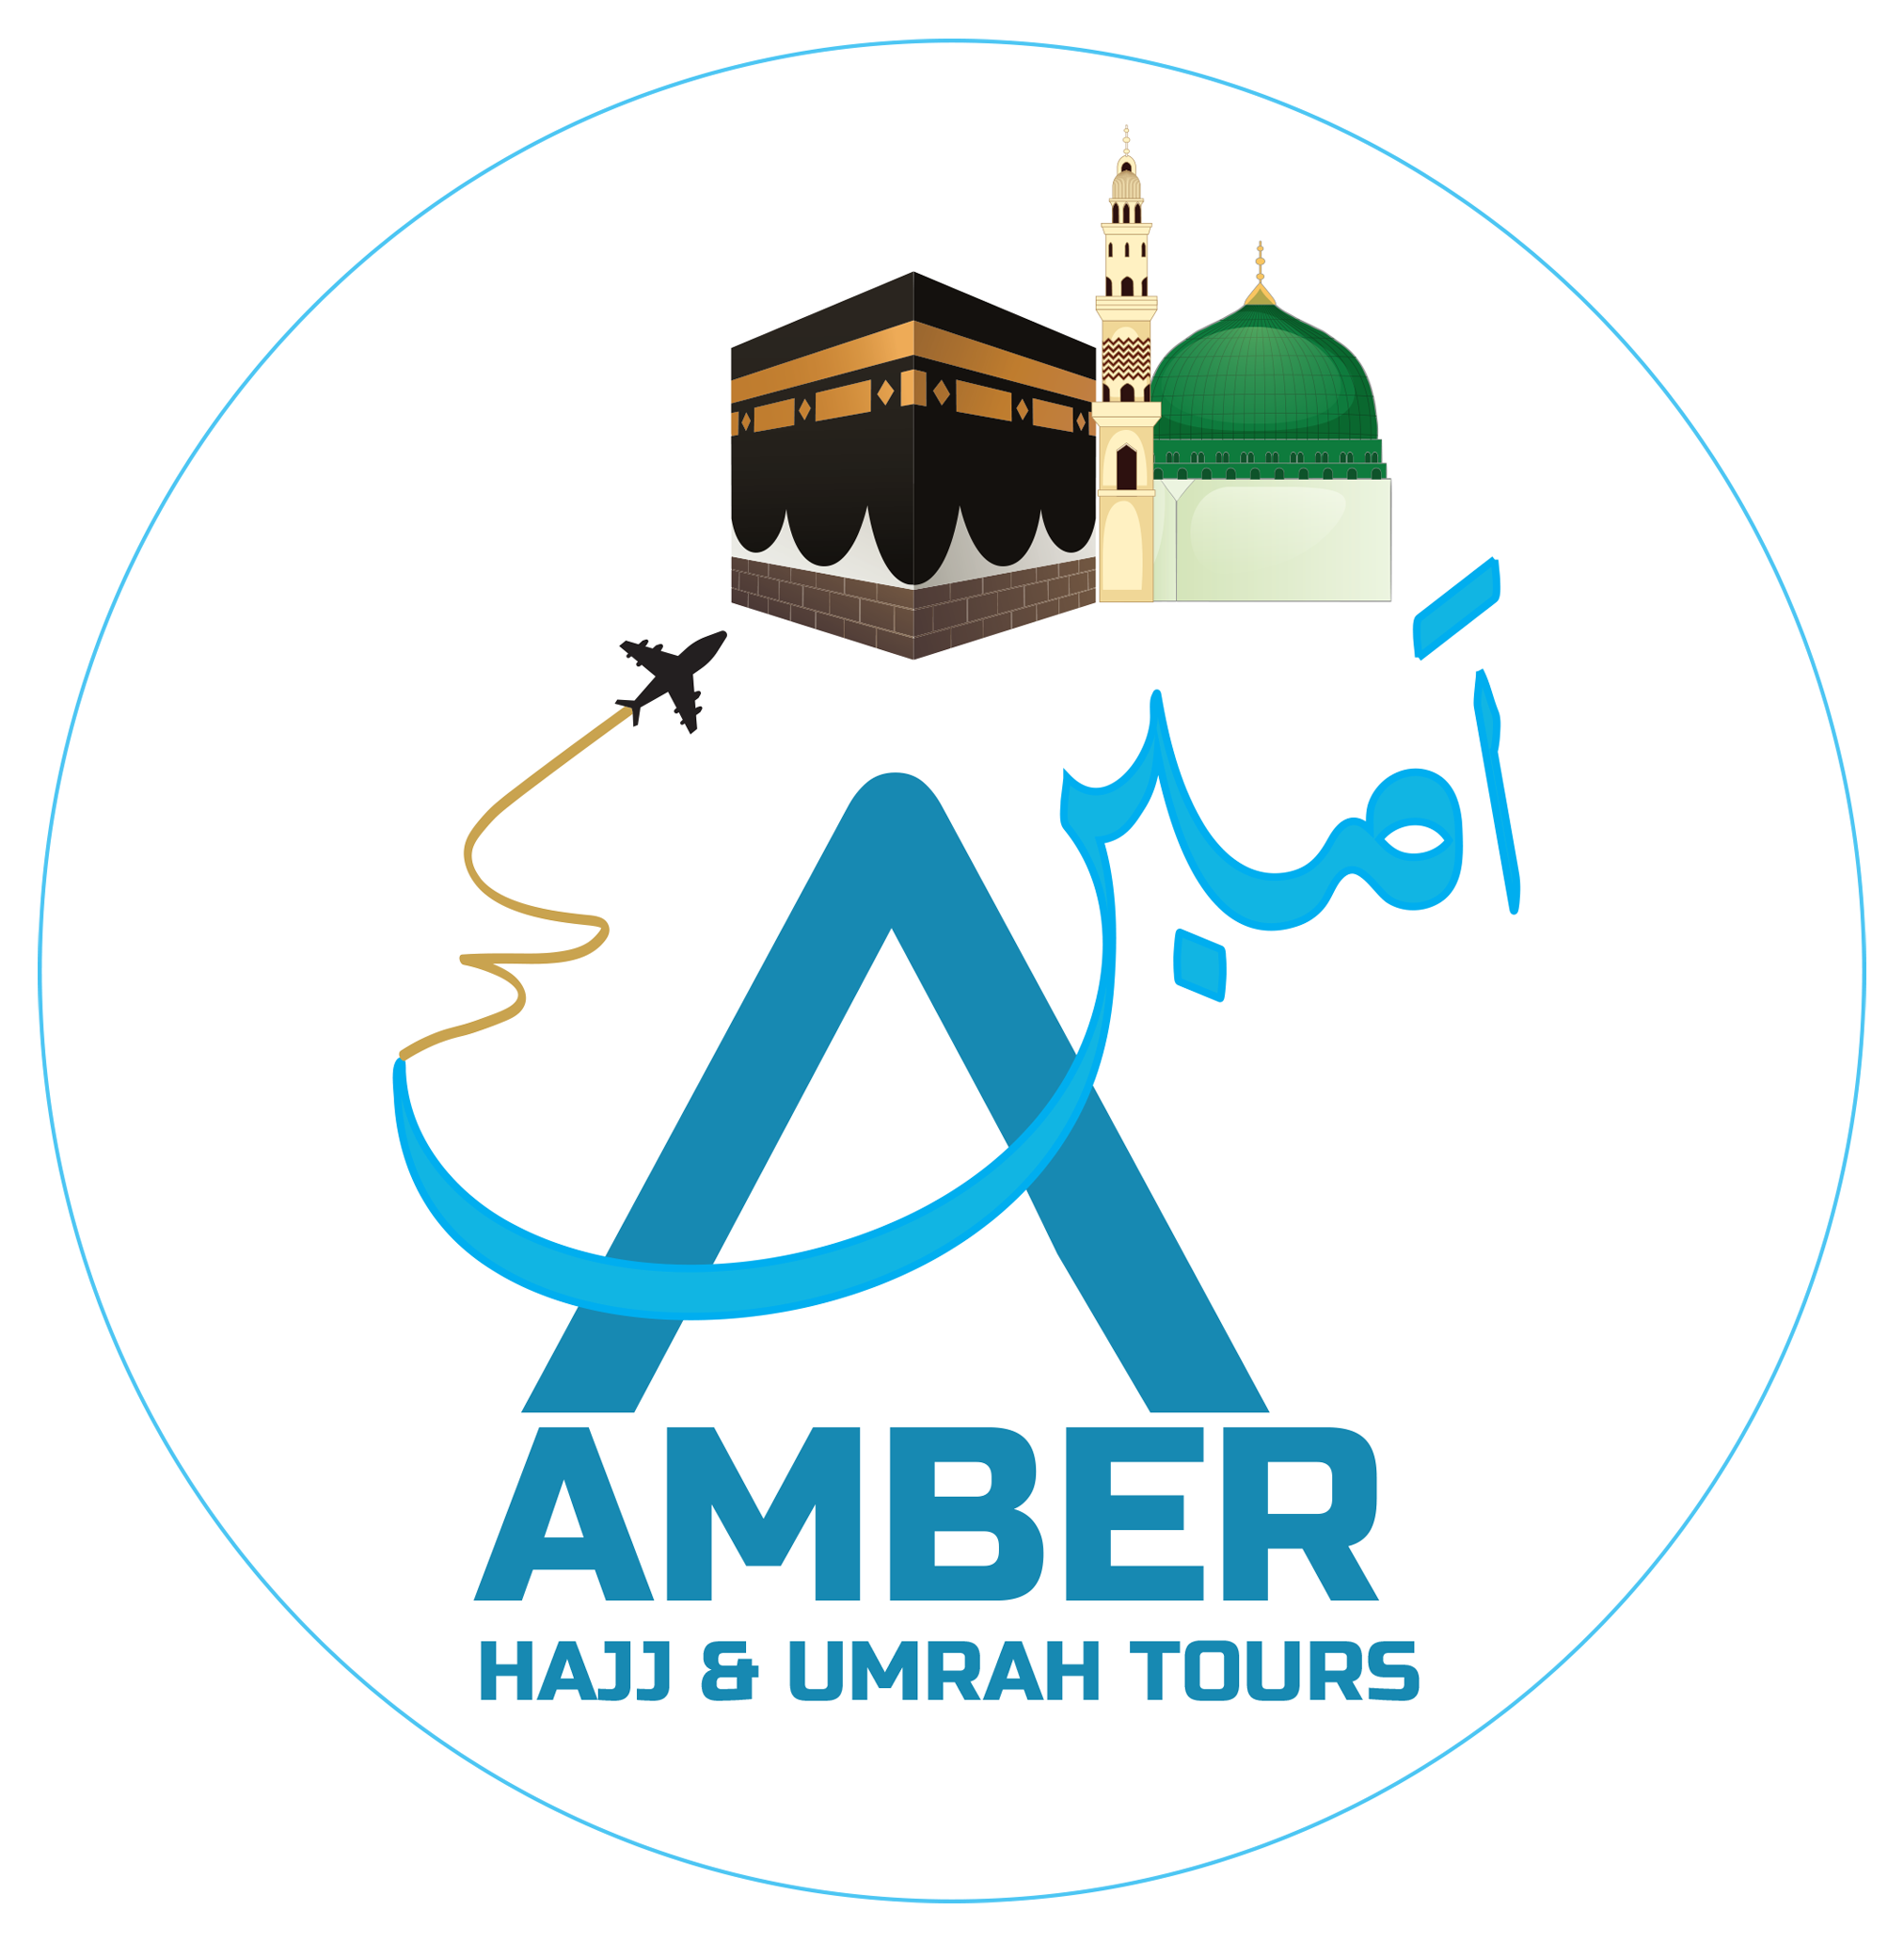 ansaar tours & travels hajj & umrah 2023 pune photos